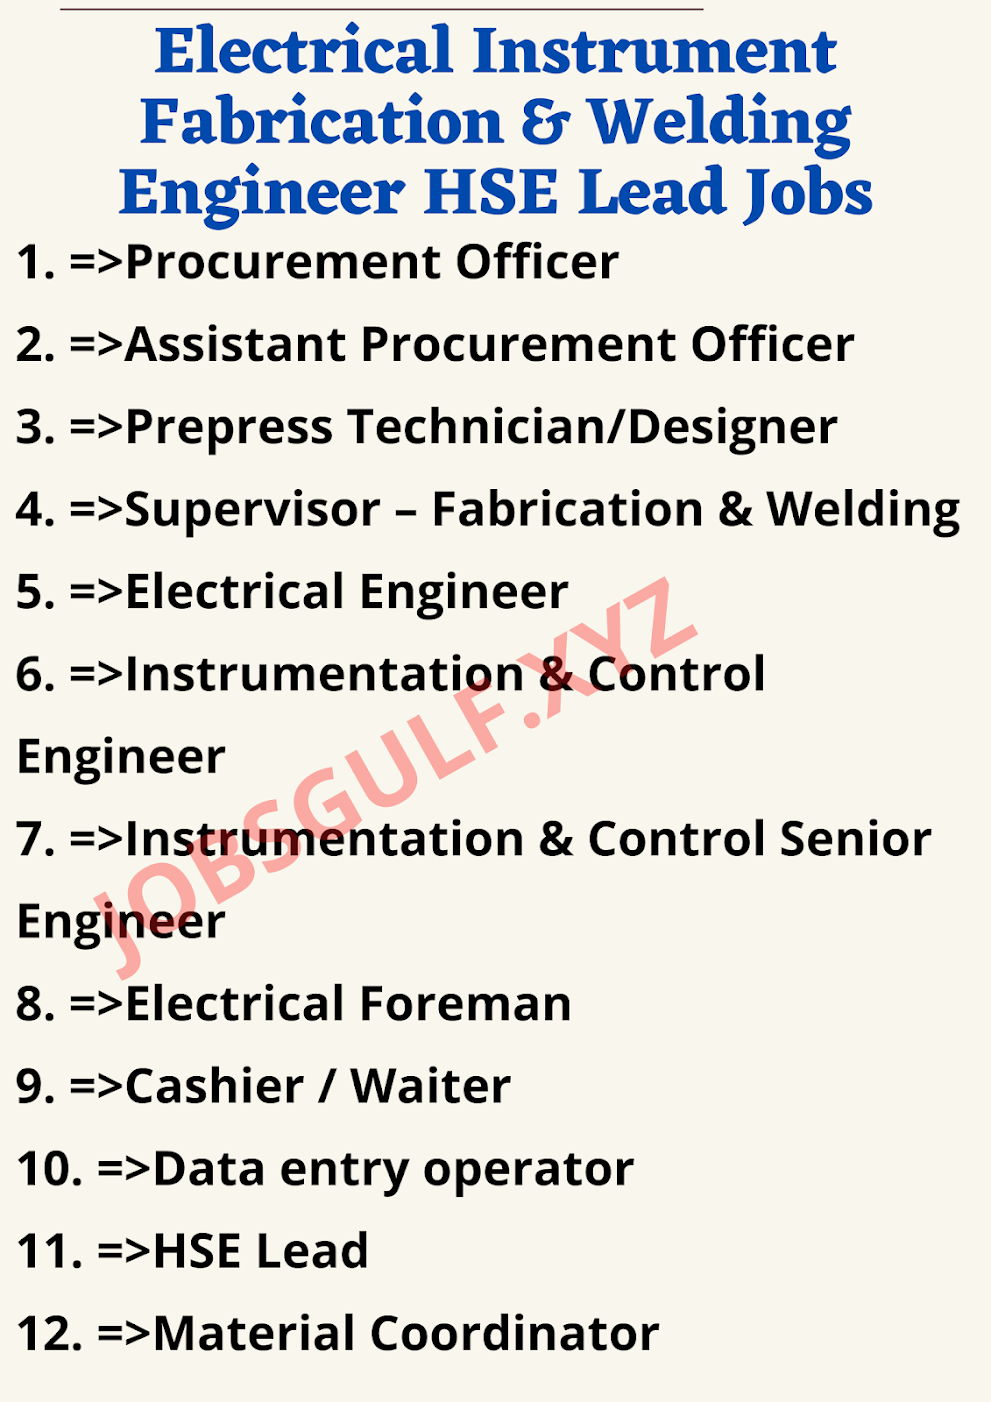 Electrical Instrument Fabrication & Welding Engineer HSE Lead Jobs